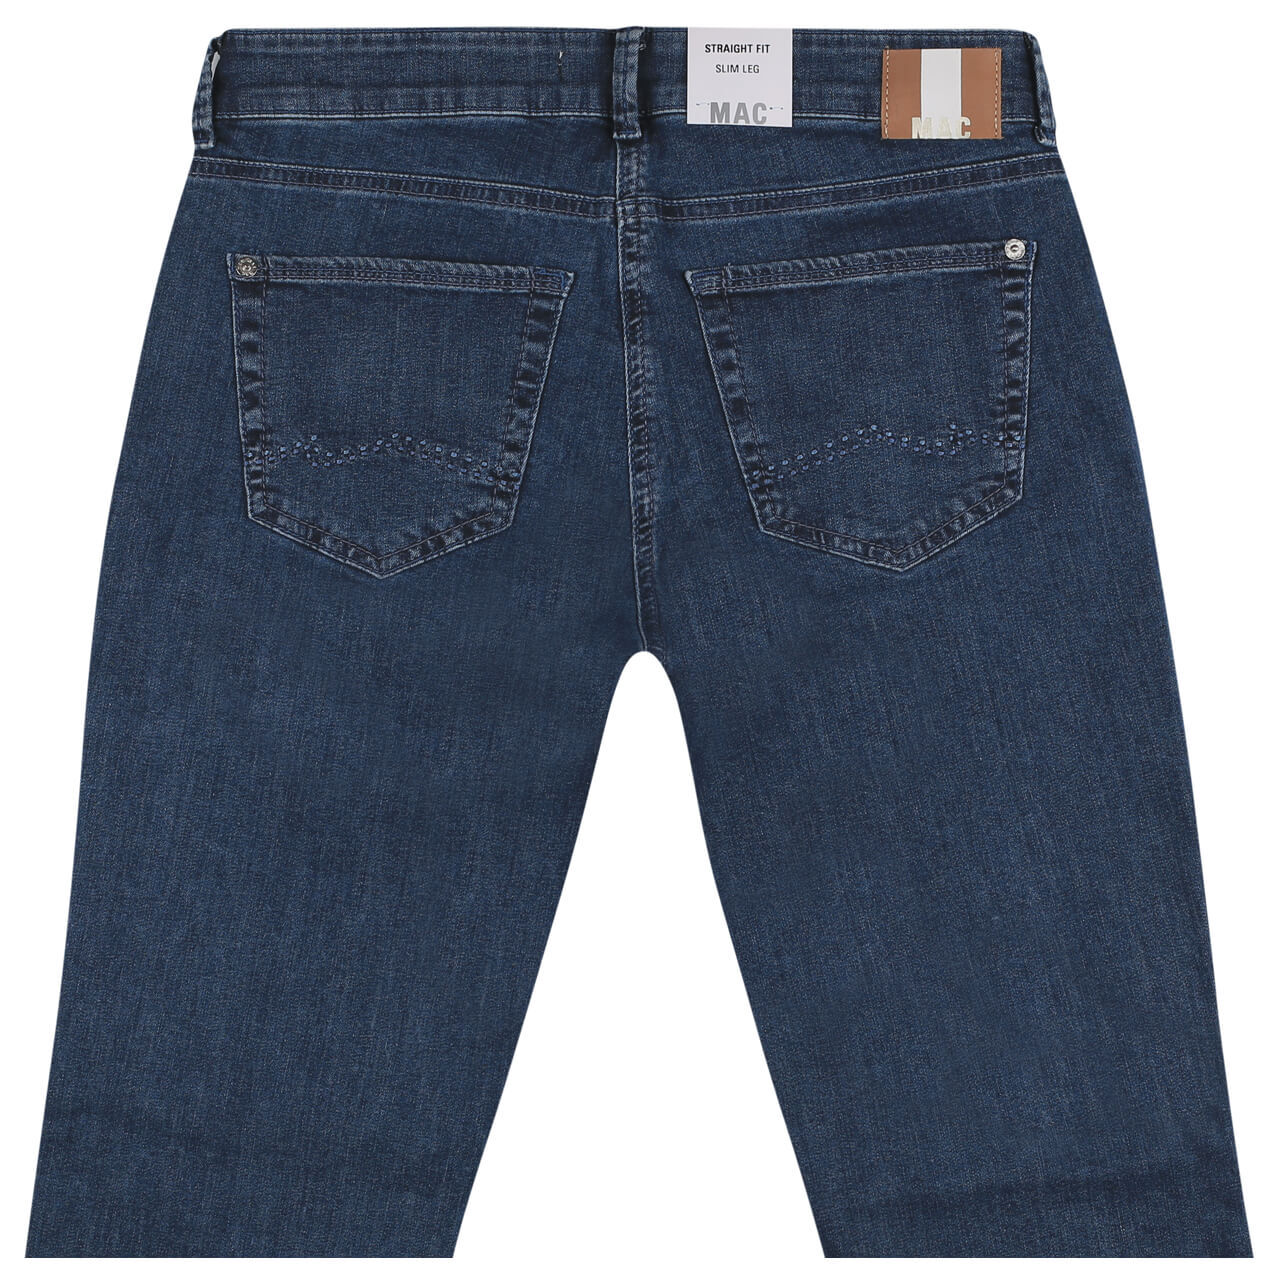 MAC Jeans Carrie Pipe für Damen in Mittelblau, FarbNr.: D690